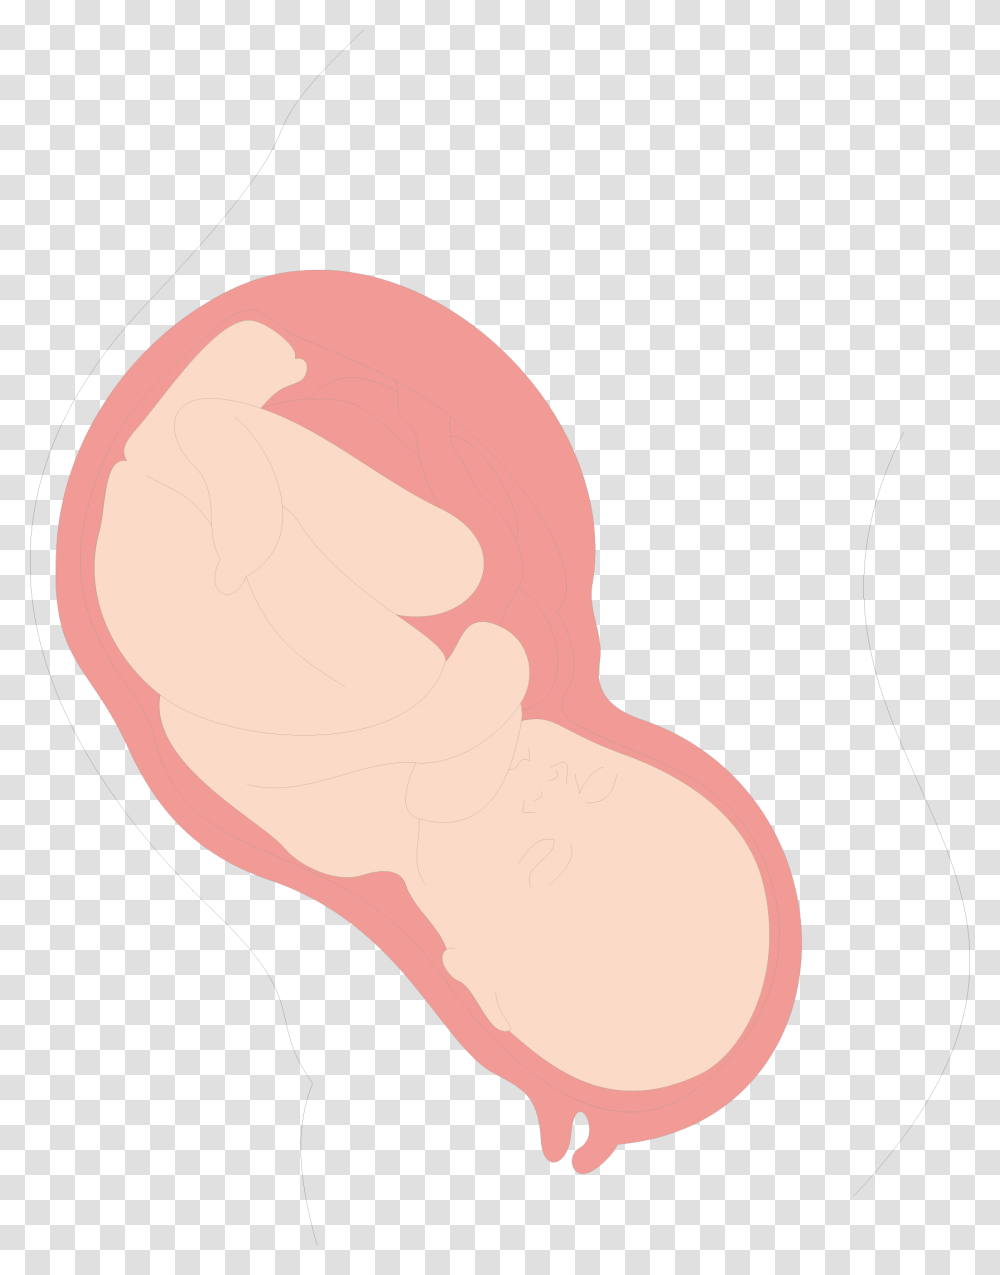 Uterus Clip Art, Hand, Mouth, Ear, Baseball Cap Transparent Png